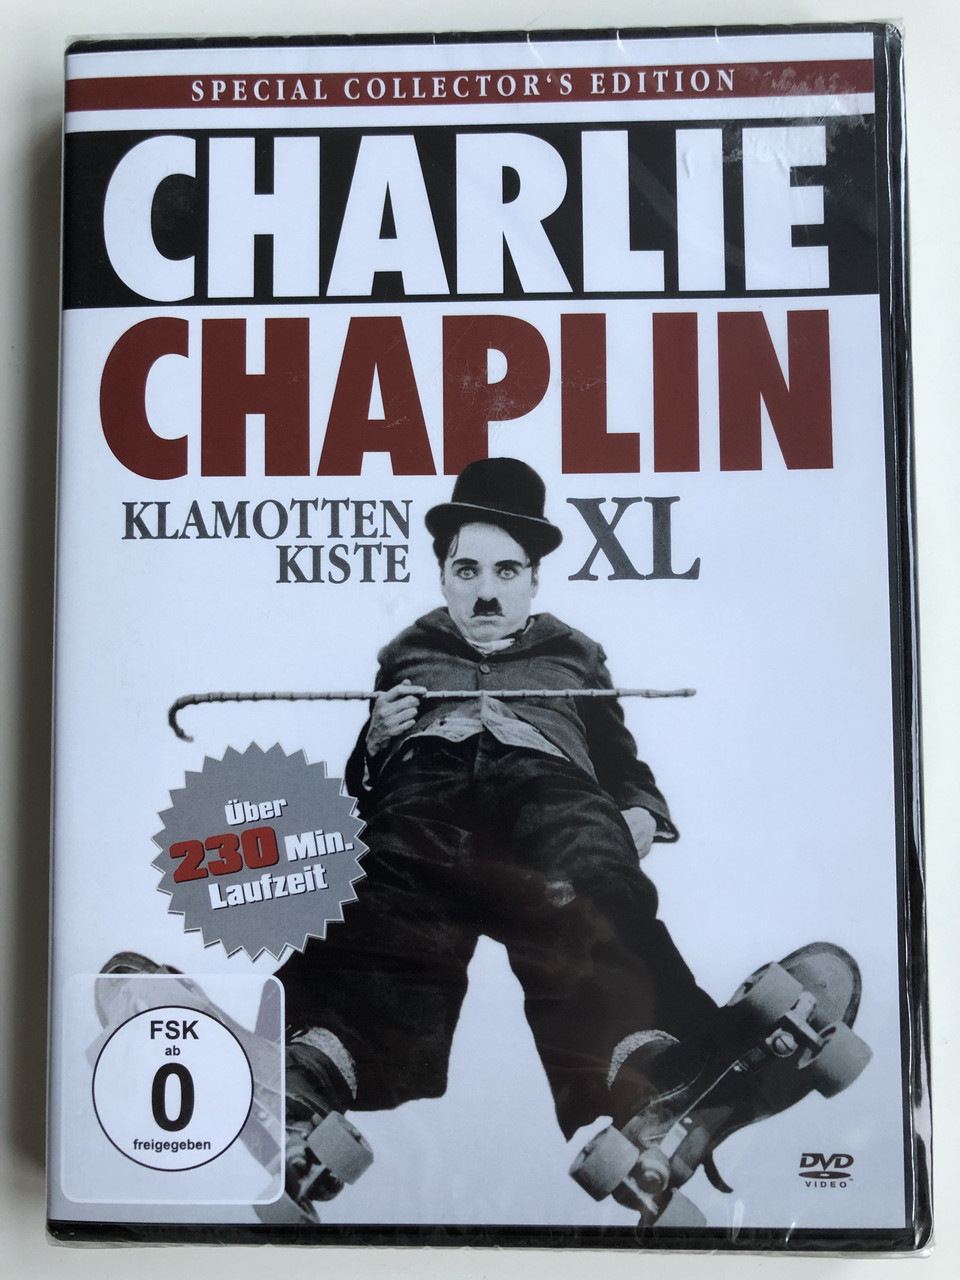 Charlie Chaplin - Klamottenkiste XL DVD / Special German Collector's  Edition / AKA Gute Nacht mit Charlie / Directed by Charles Chaplin /  Starring: Charlie Chaplin, Billy Bevan, Snub Pollard - bibleinmylanguage